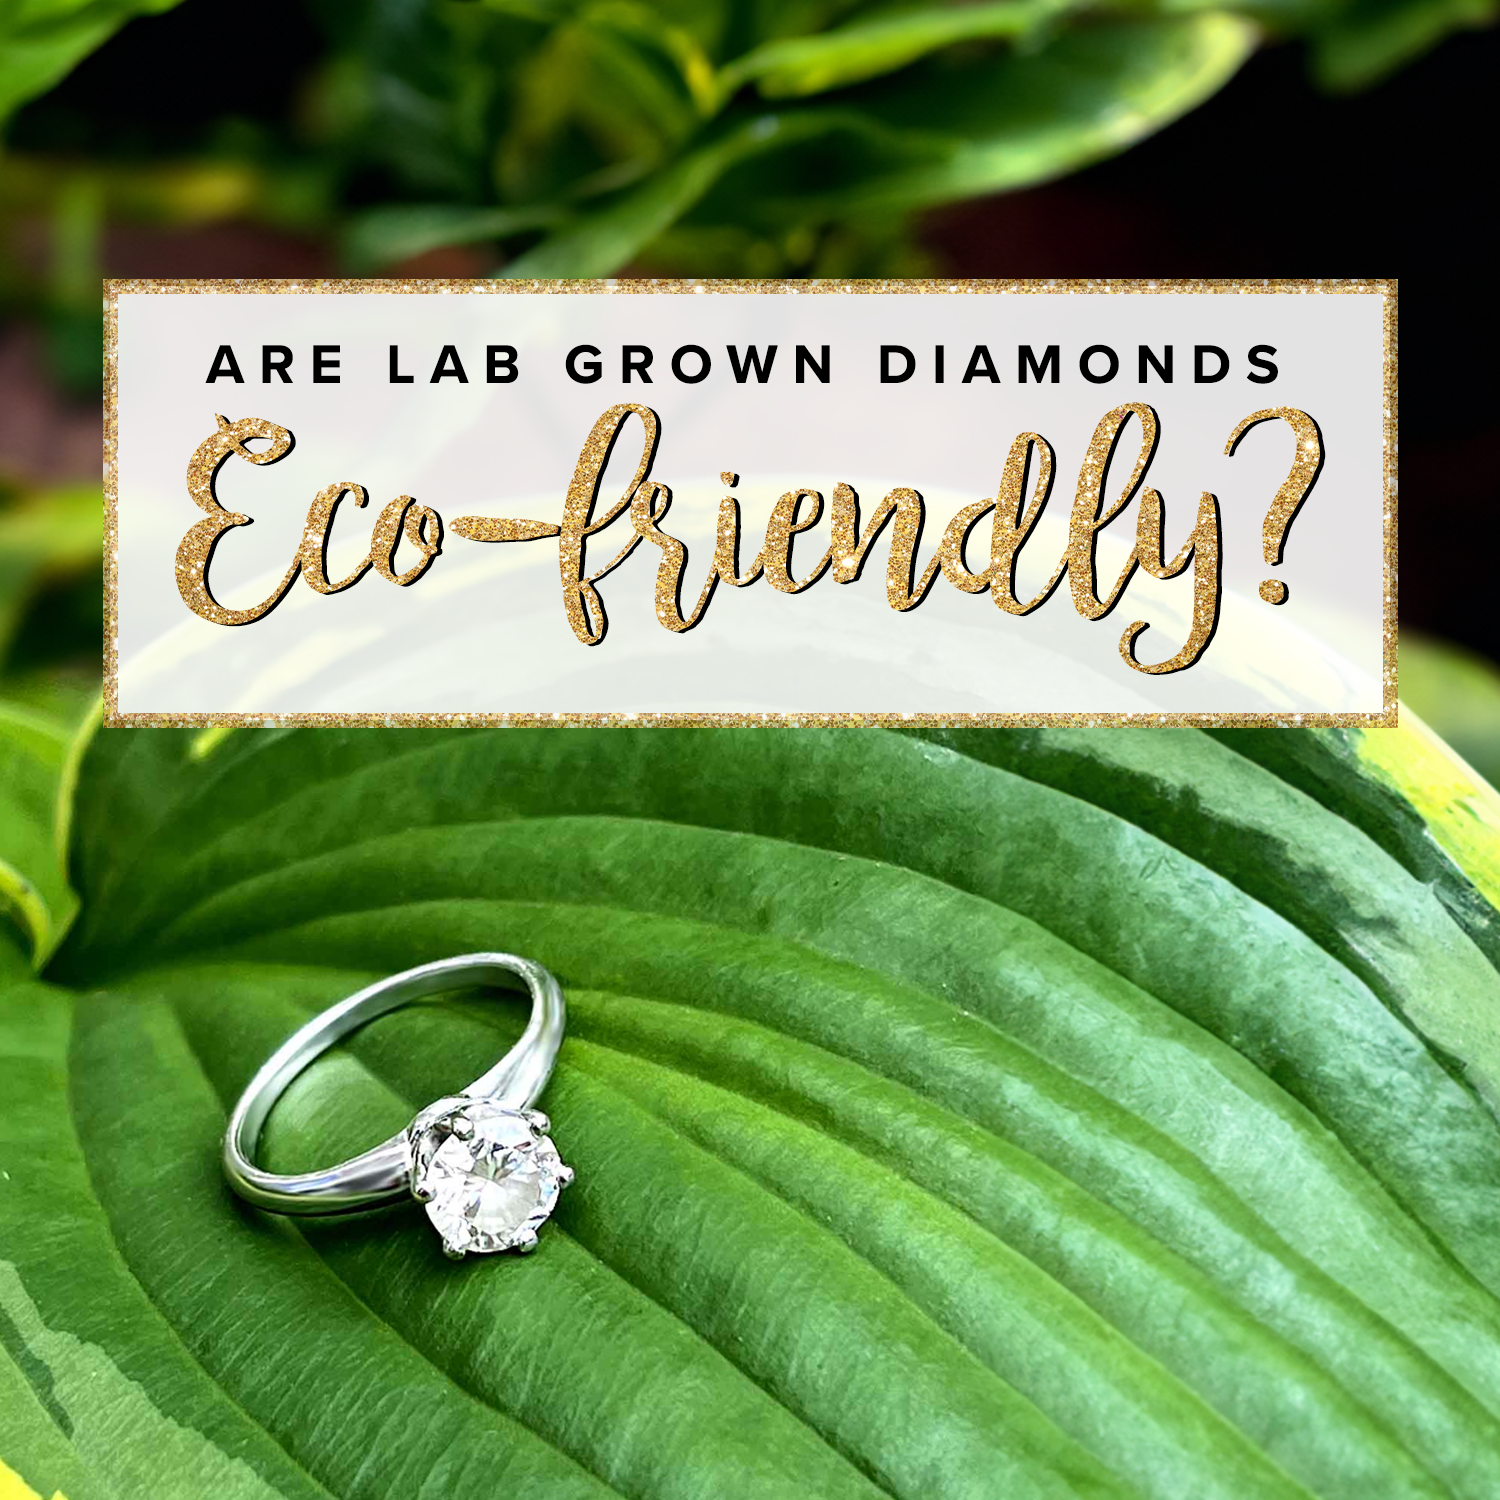 Are Lab Grown Diamonds Eco-friendly?